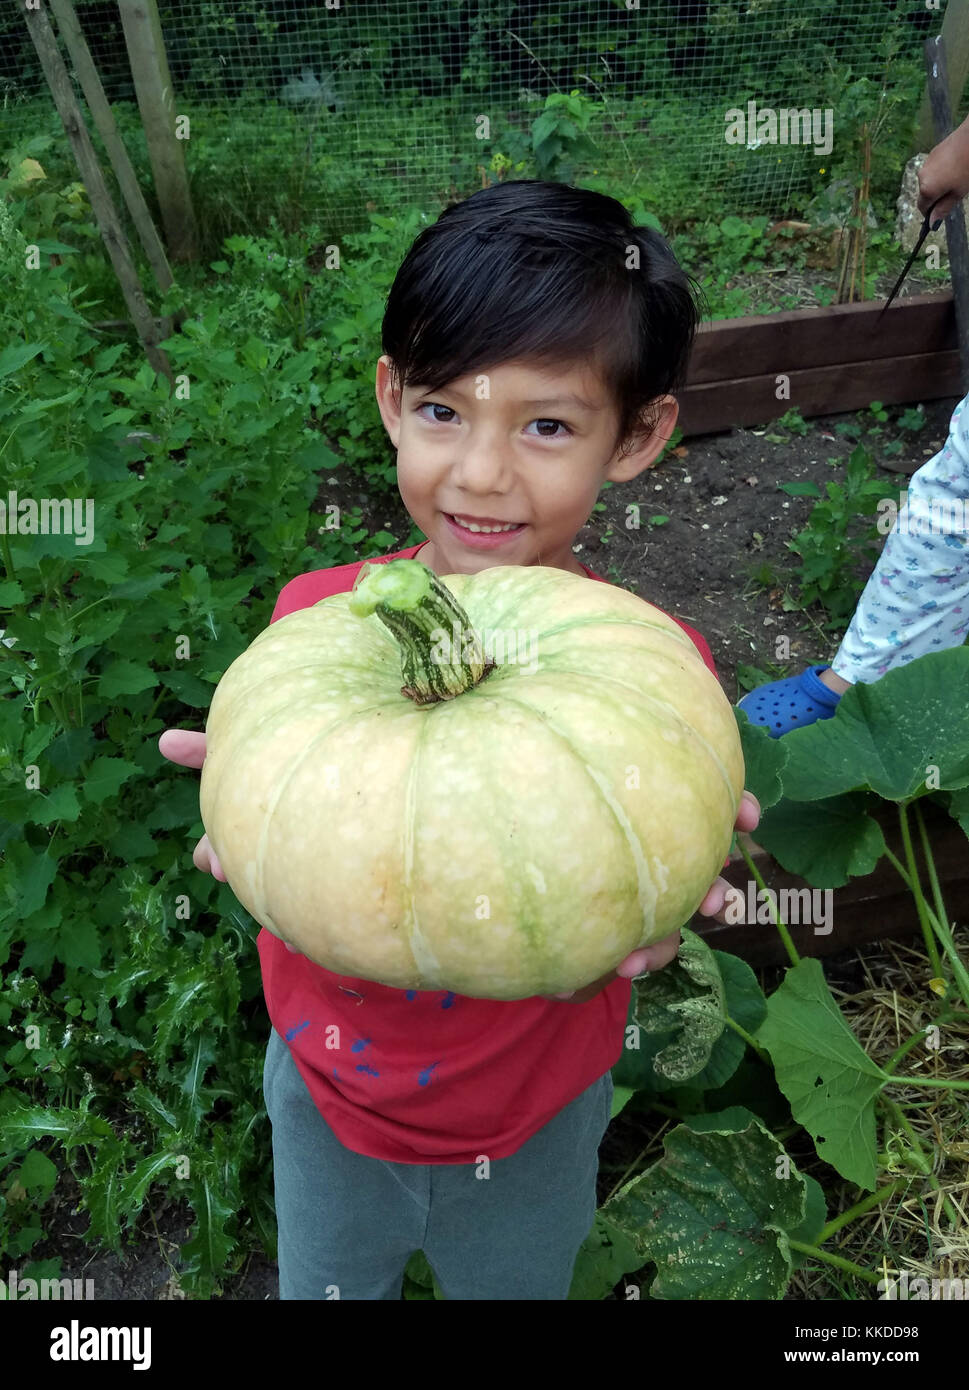 oung eurasianboy carrying a pumpkin he picked up in a garden Stock Photo